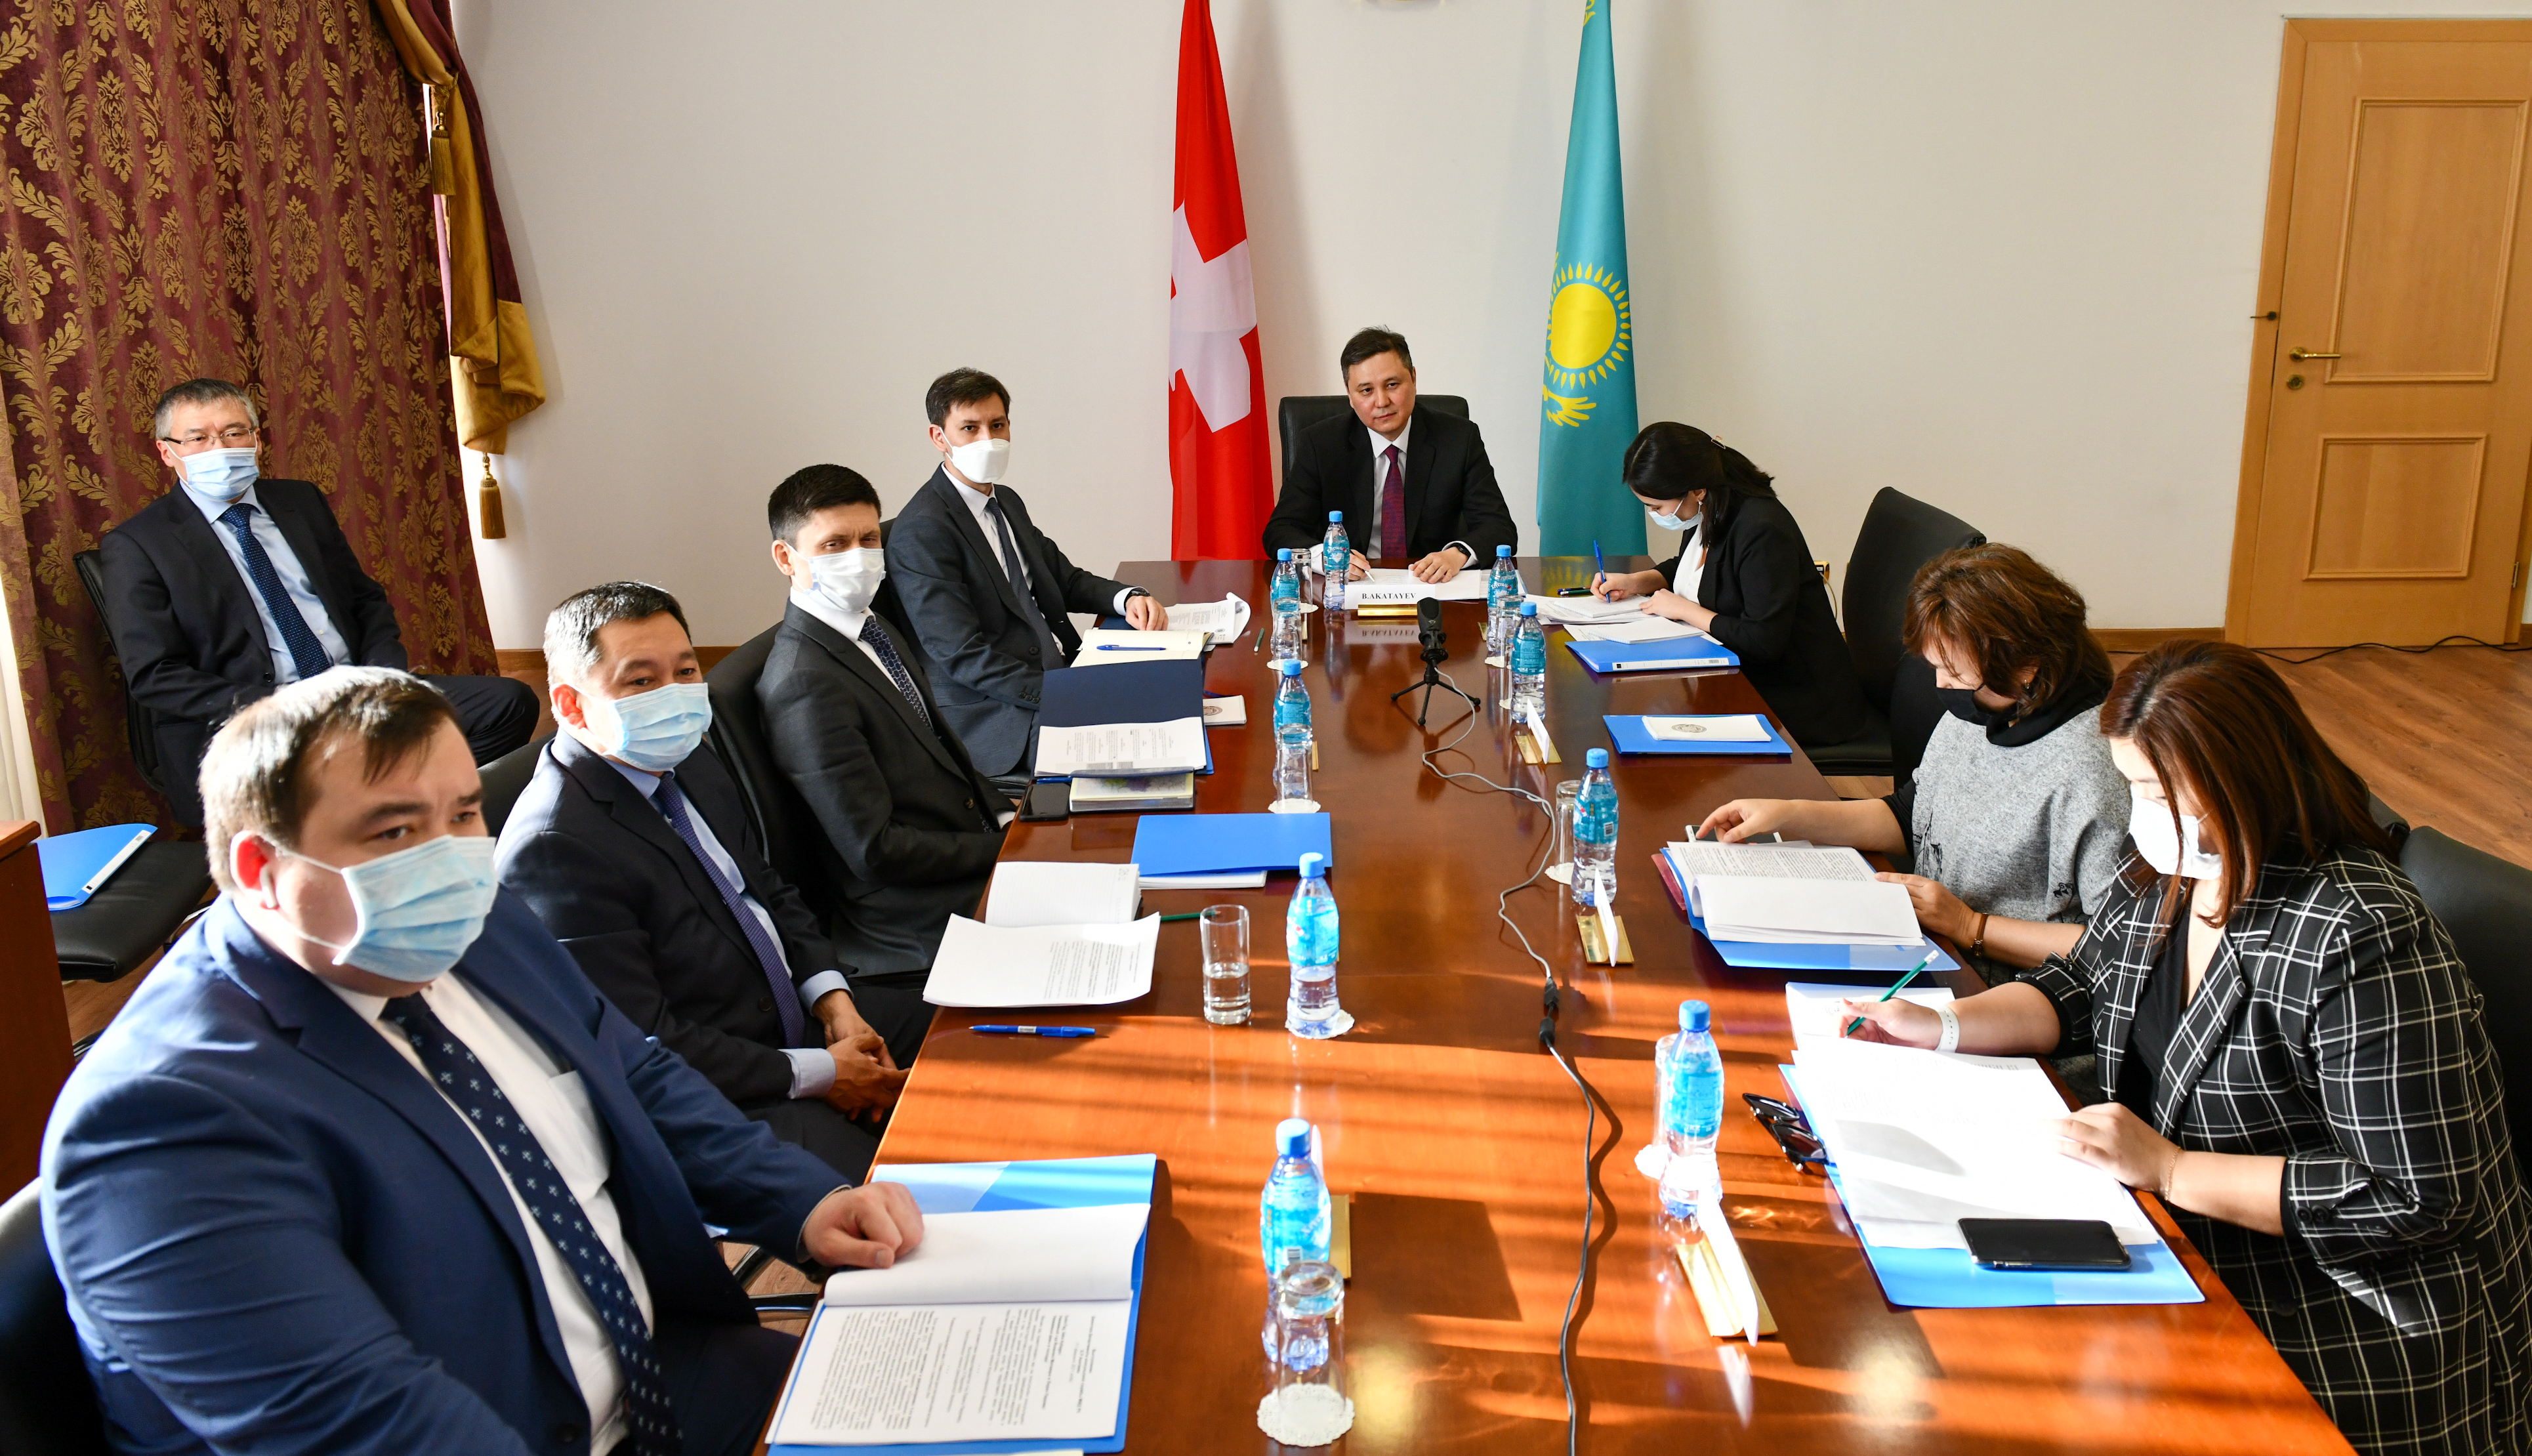 On consular consultations between Kazakhstan and Switzerland